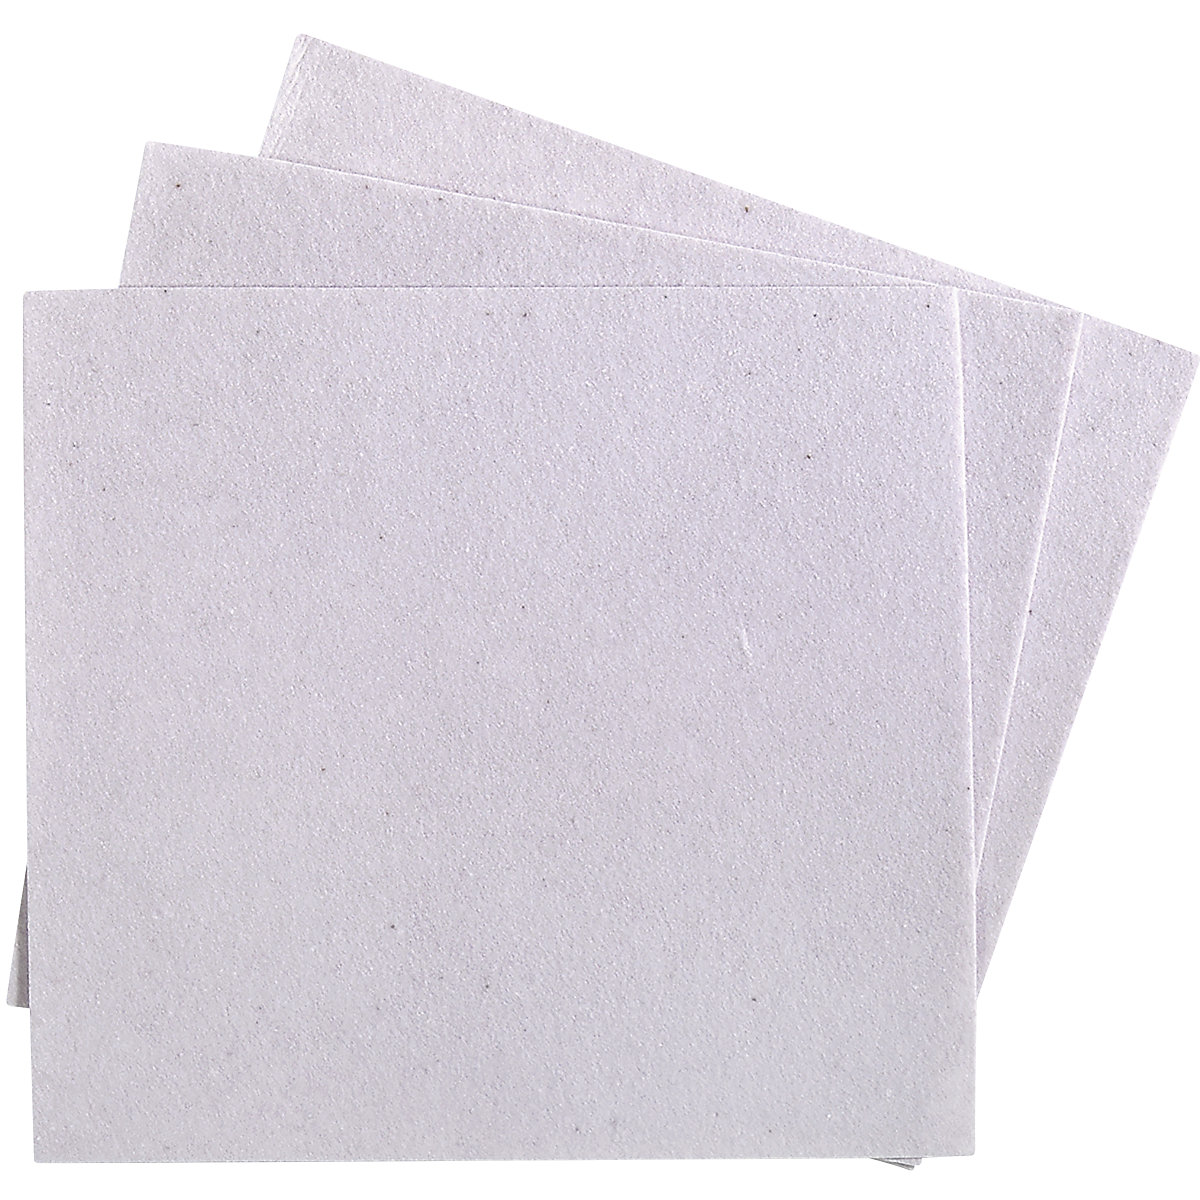 HazMat absorbent sheeting mat for chemicals, neutralises acids – PIG